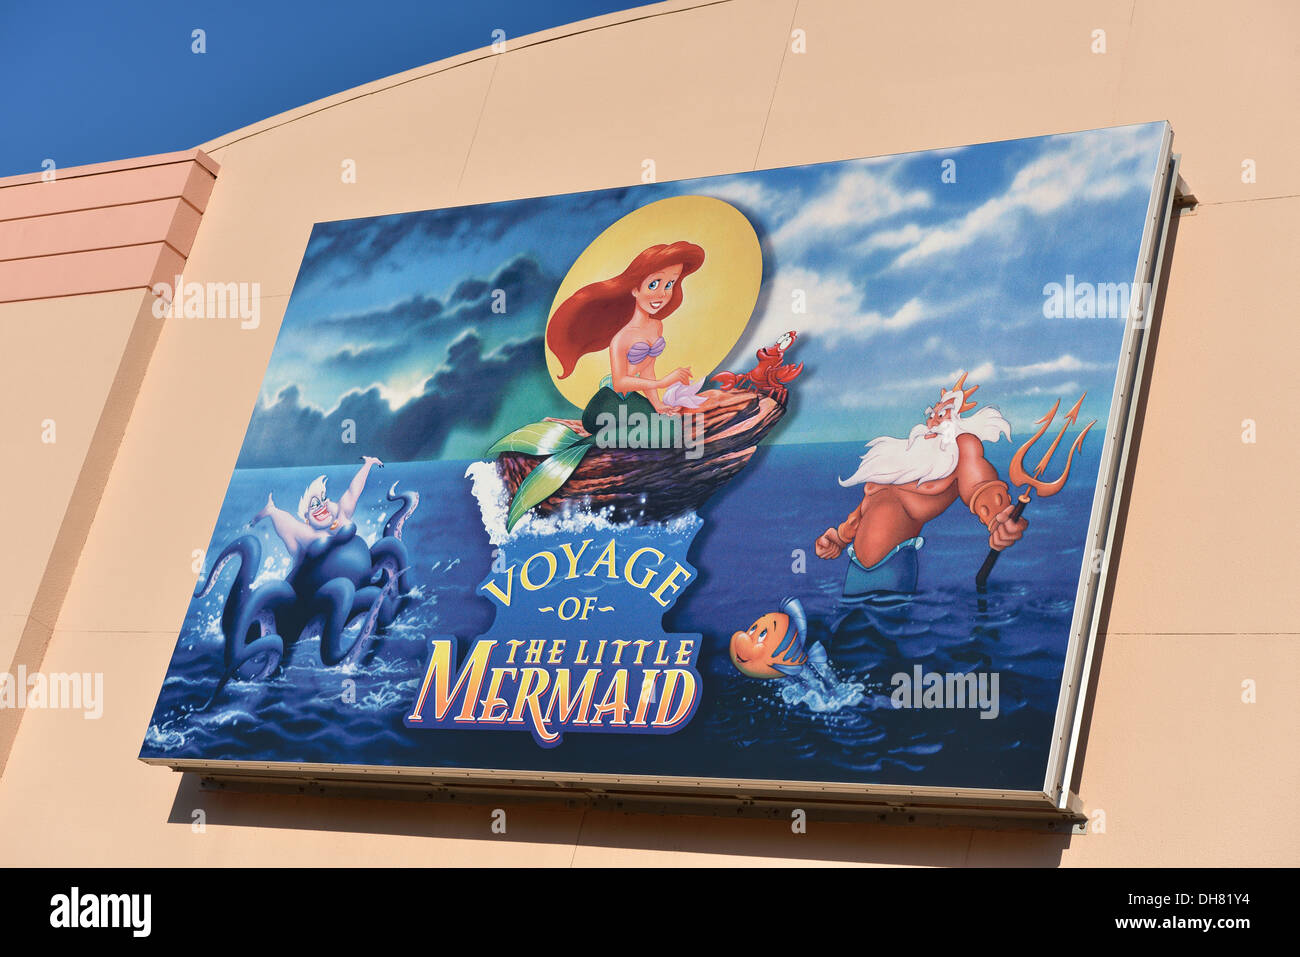 Voyage of the Little Mermaid Poster, Hollywood Studios, Disney World Resort, Orlando Florida Stock Photo